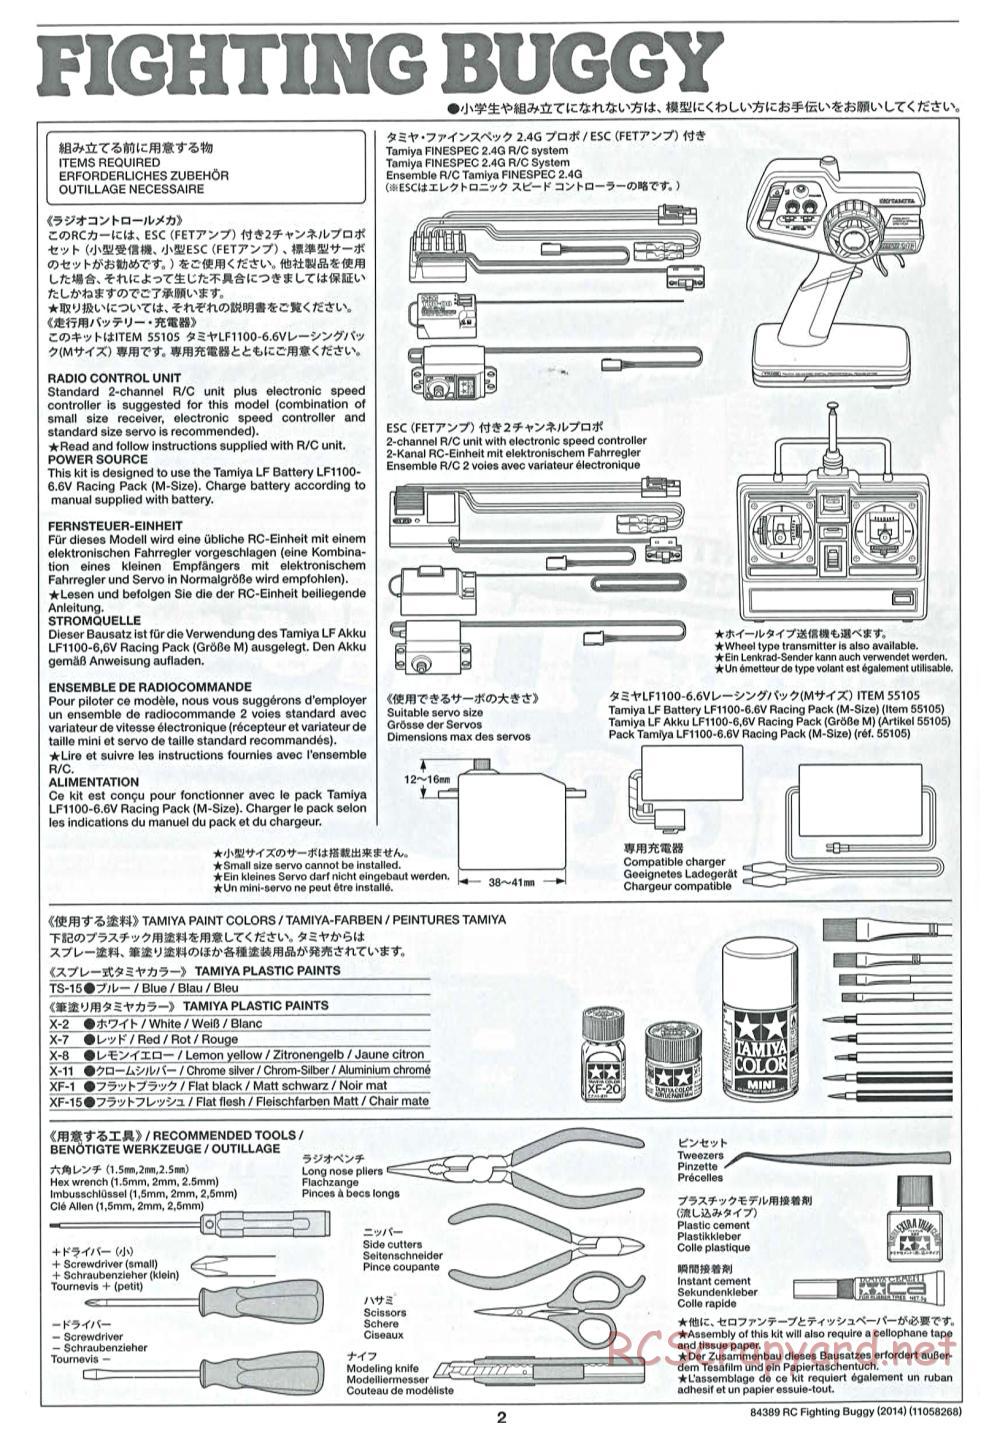 Tamiya - Fighting Buggy (2014) Chassis - Manual - Page 2